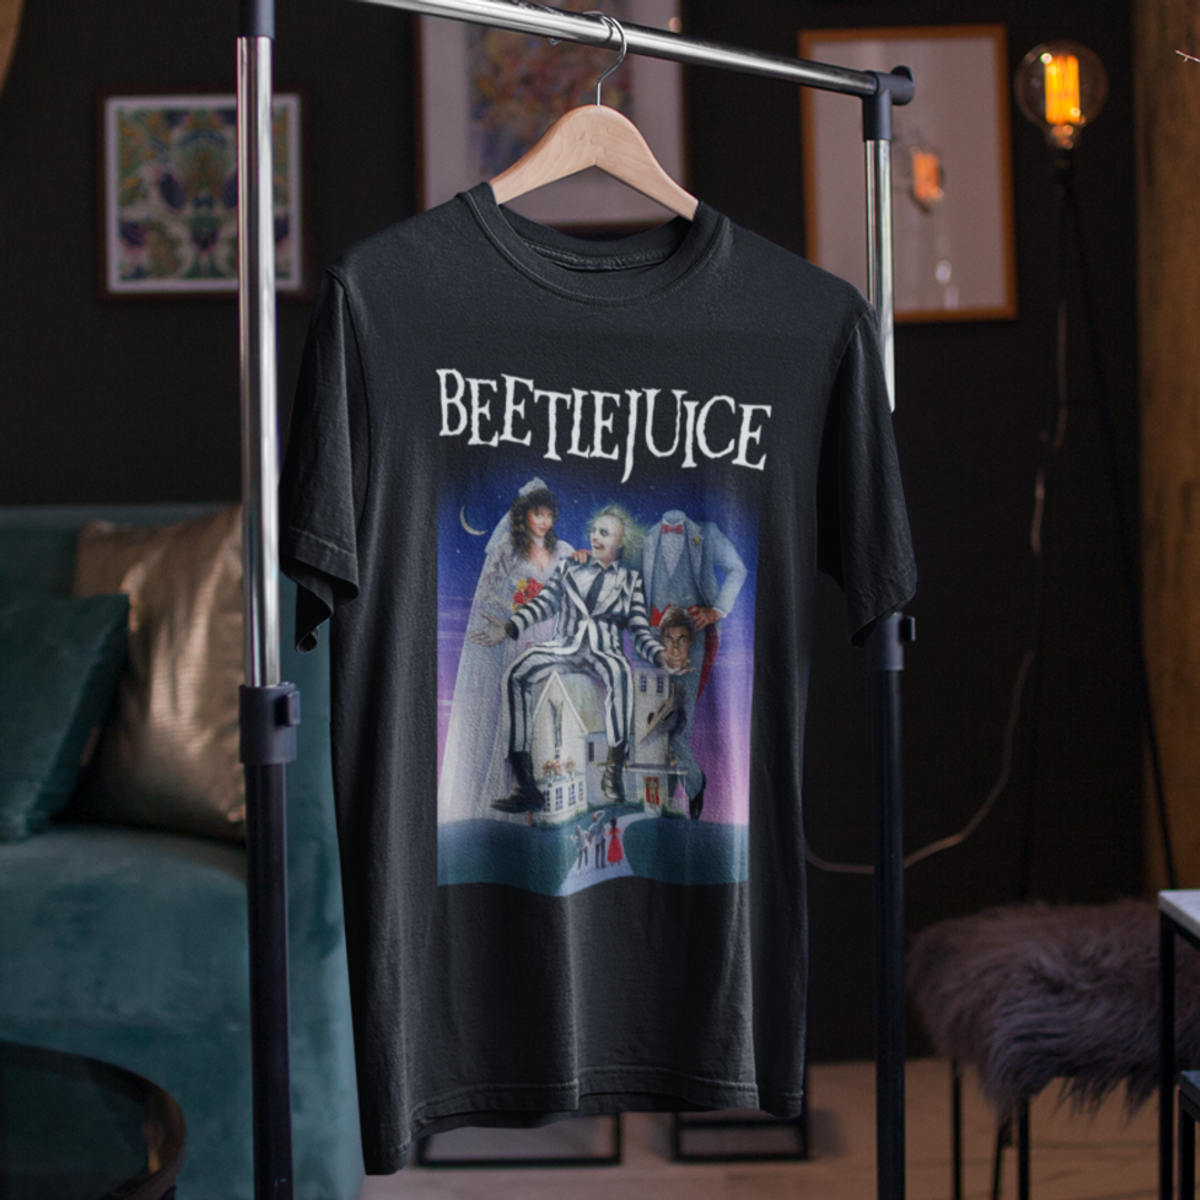 Nome do produto: Beetlejuice